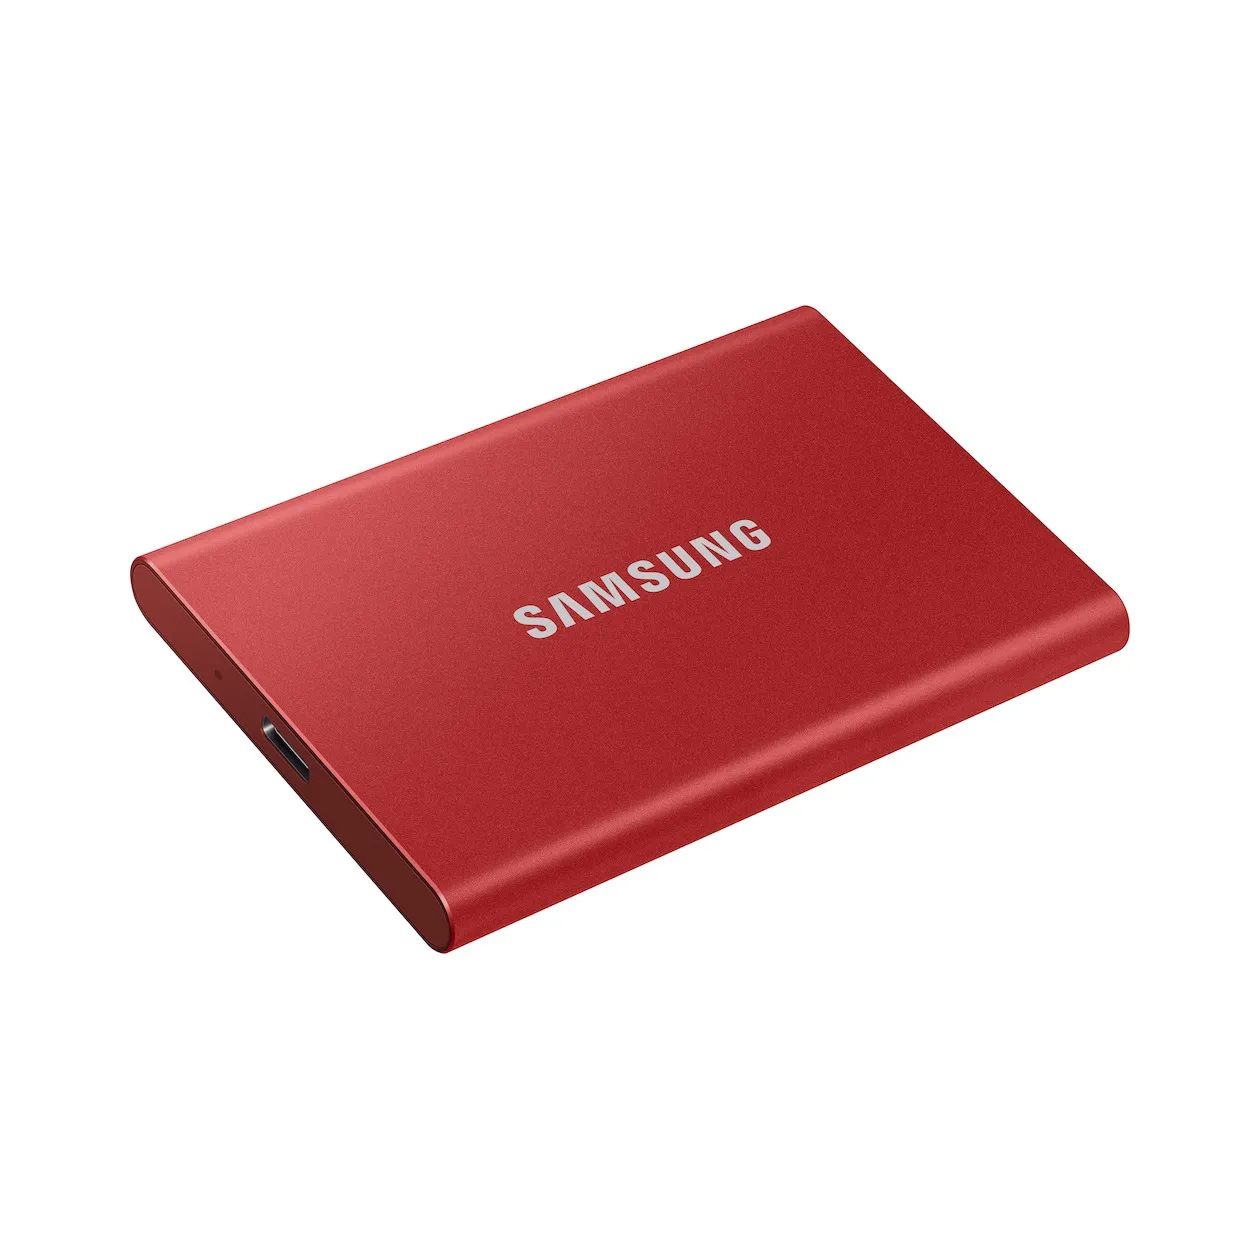 Samsung Portable SSD T7 500GB Rood